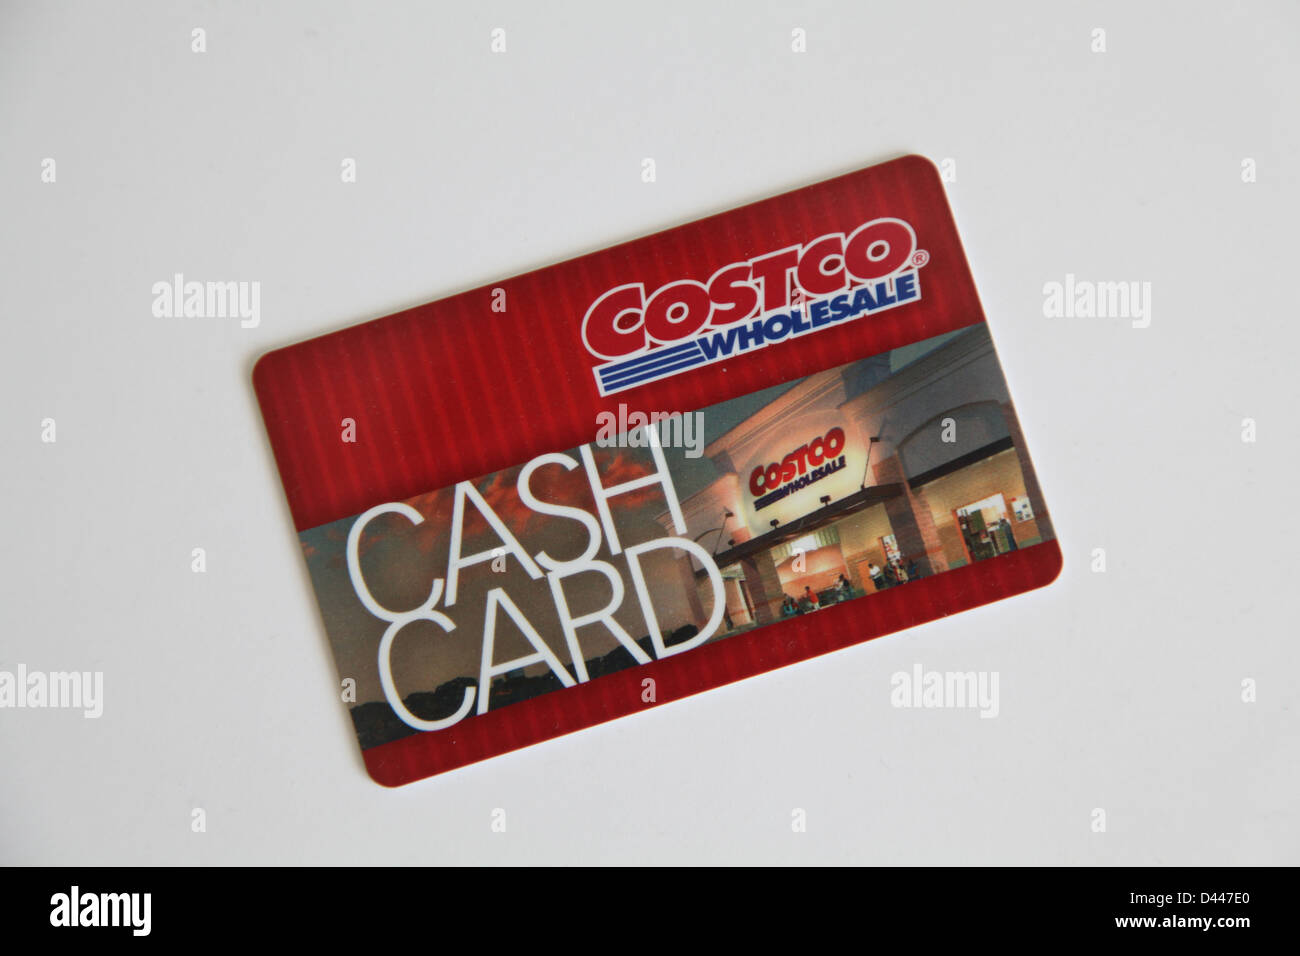 costco-cash-card-stock-photo-alamy